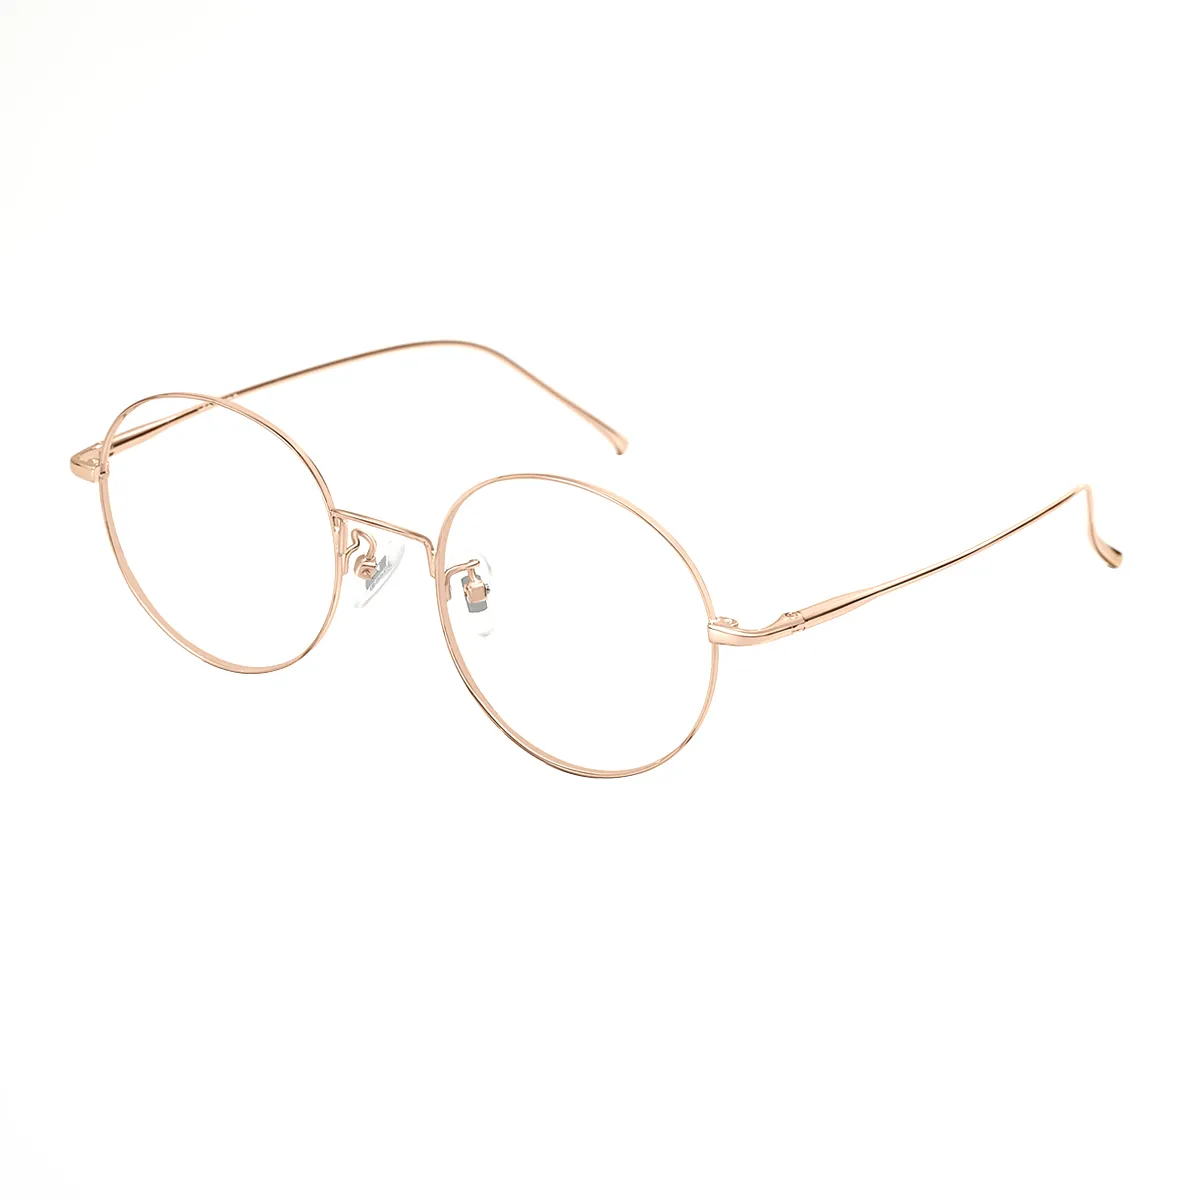 Renata - Round Rose-Gold Glasses for Women